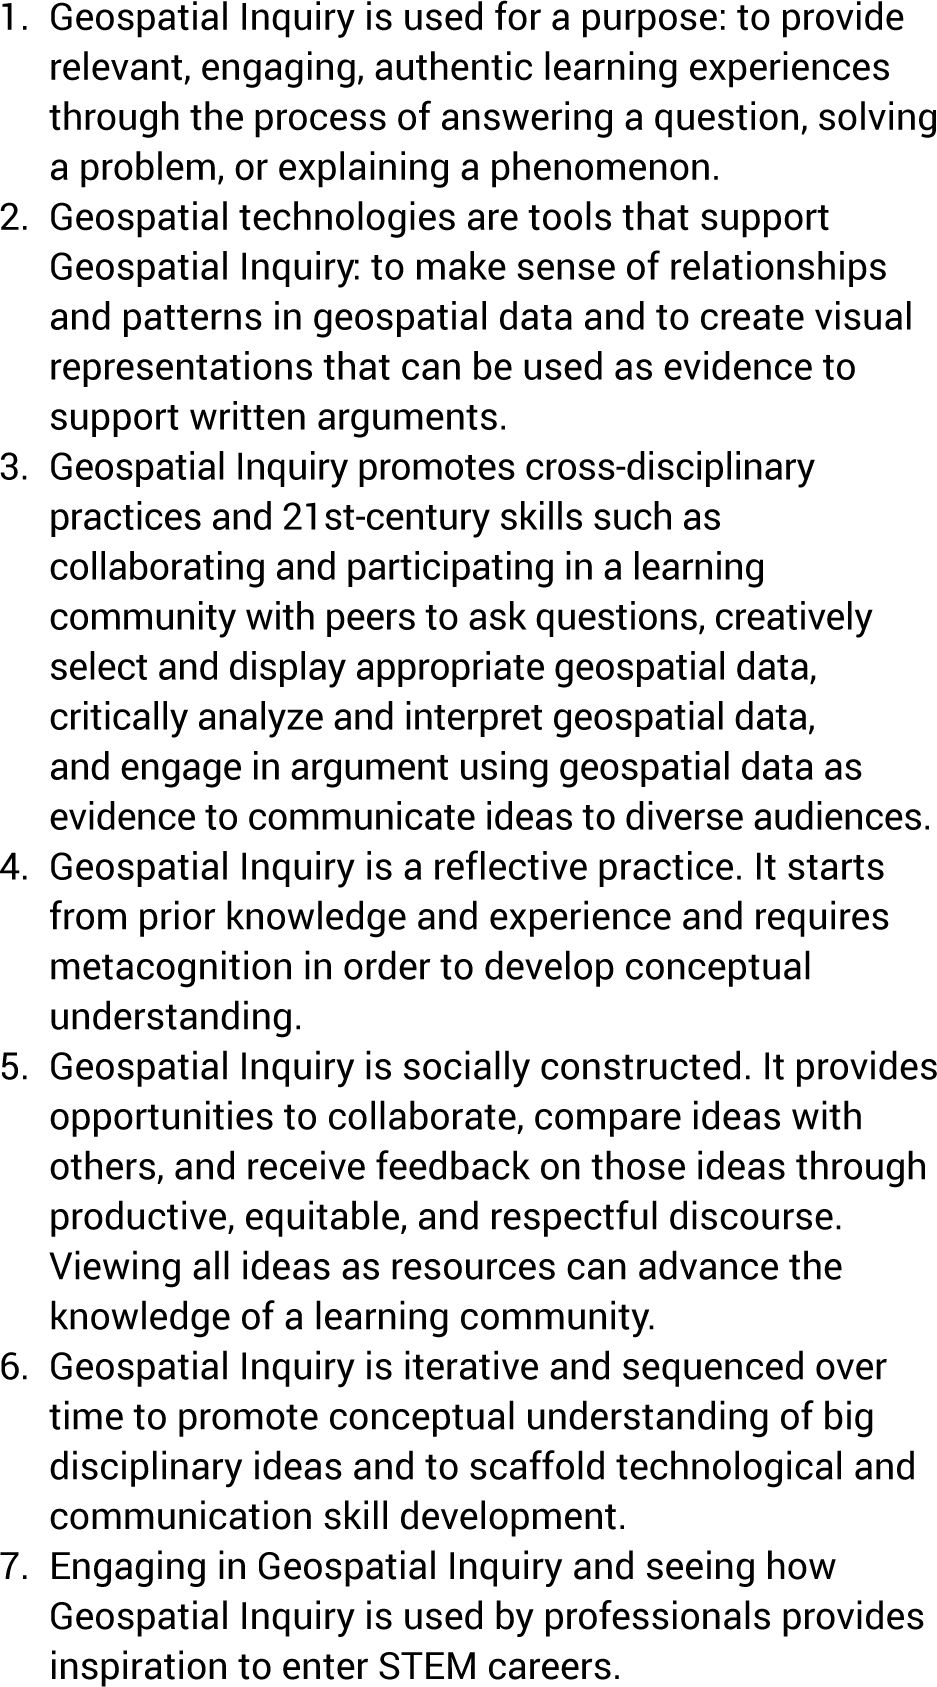 Guiding principles of geospatial inquiry.